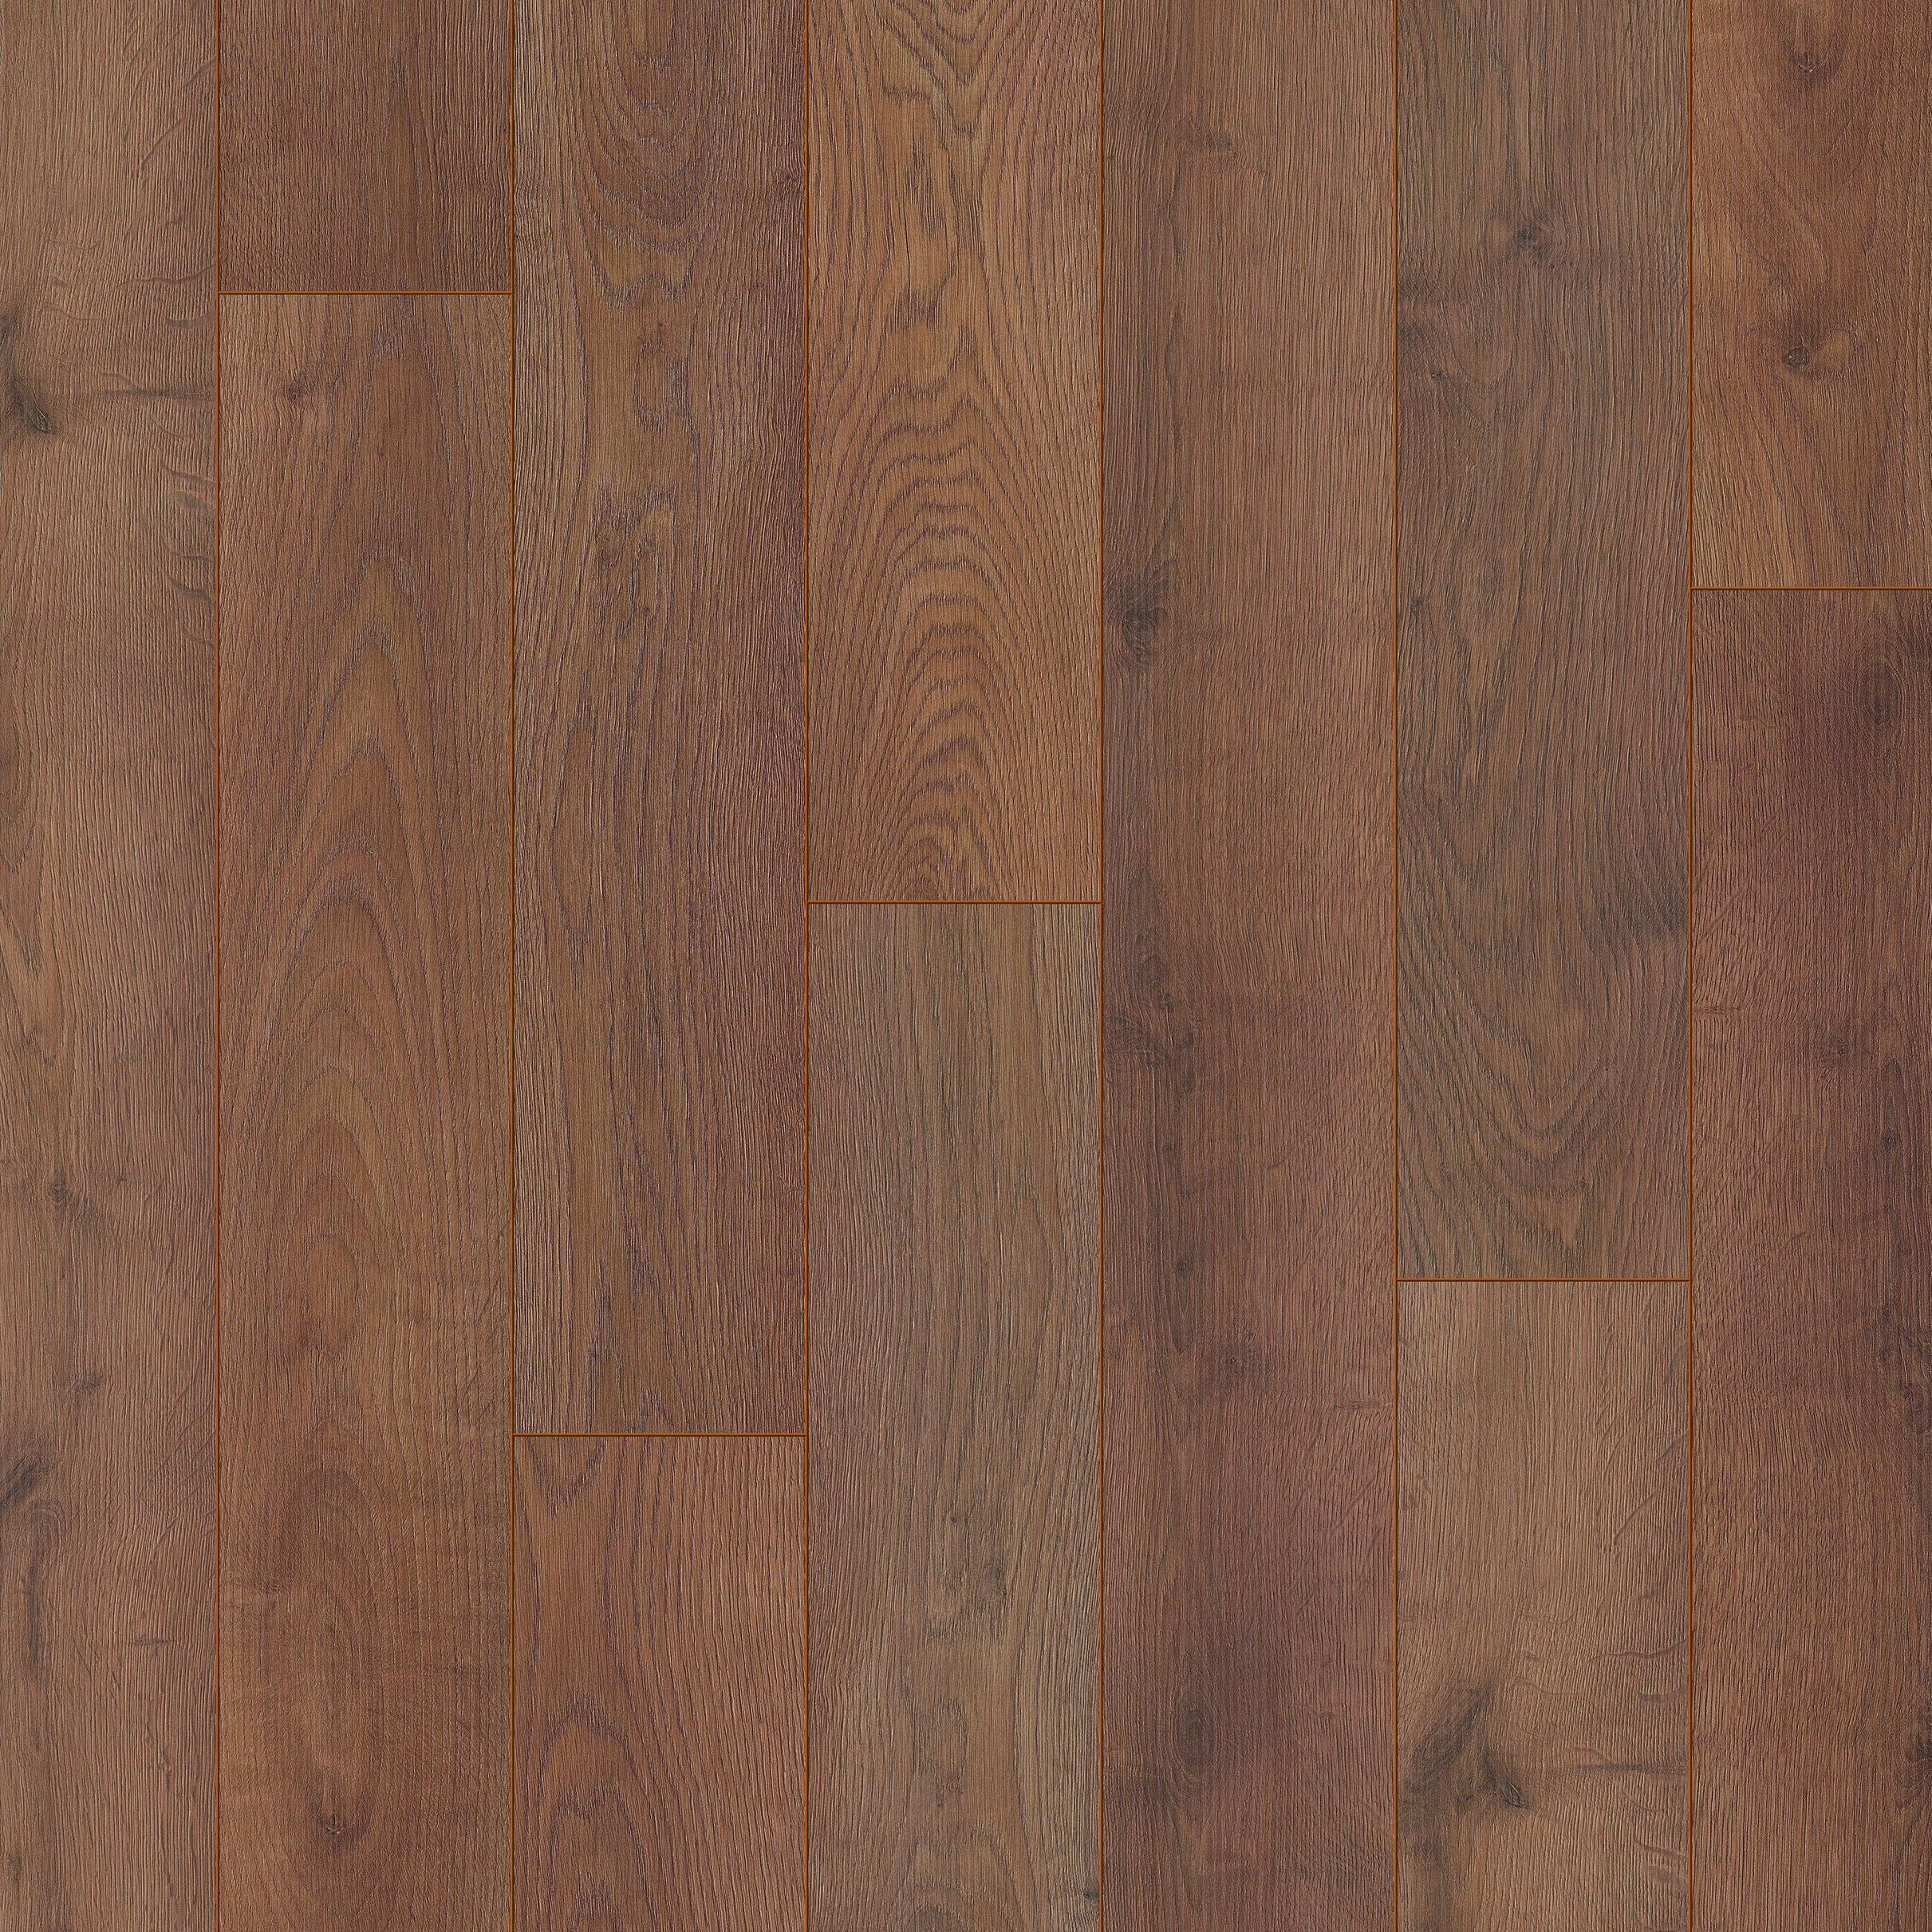 Image of Bergen Brown Oak 12mm Laminate Flooring - 1.48m2